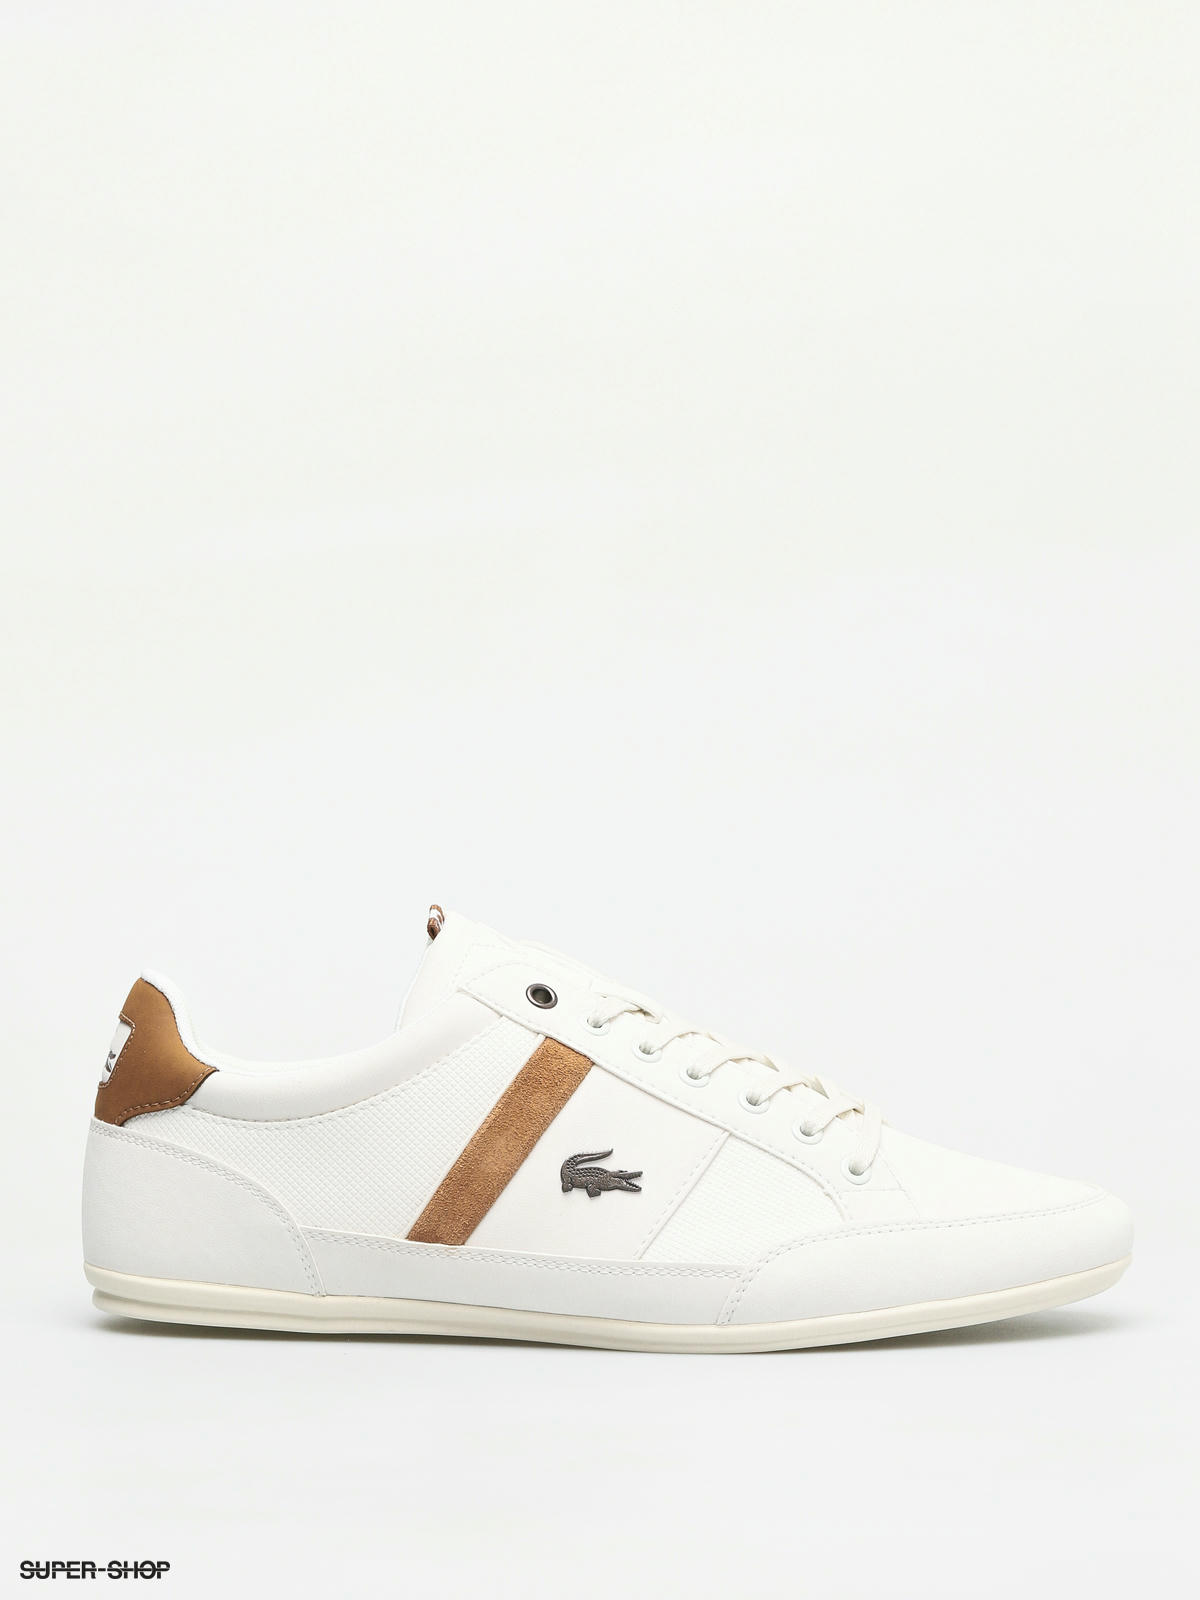 Lacoste Chaymon 119 5 Shoes (off white 